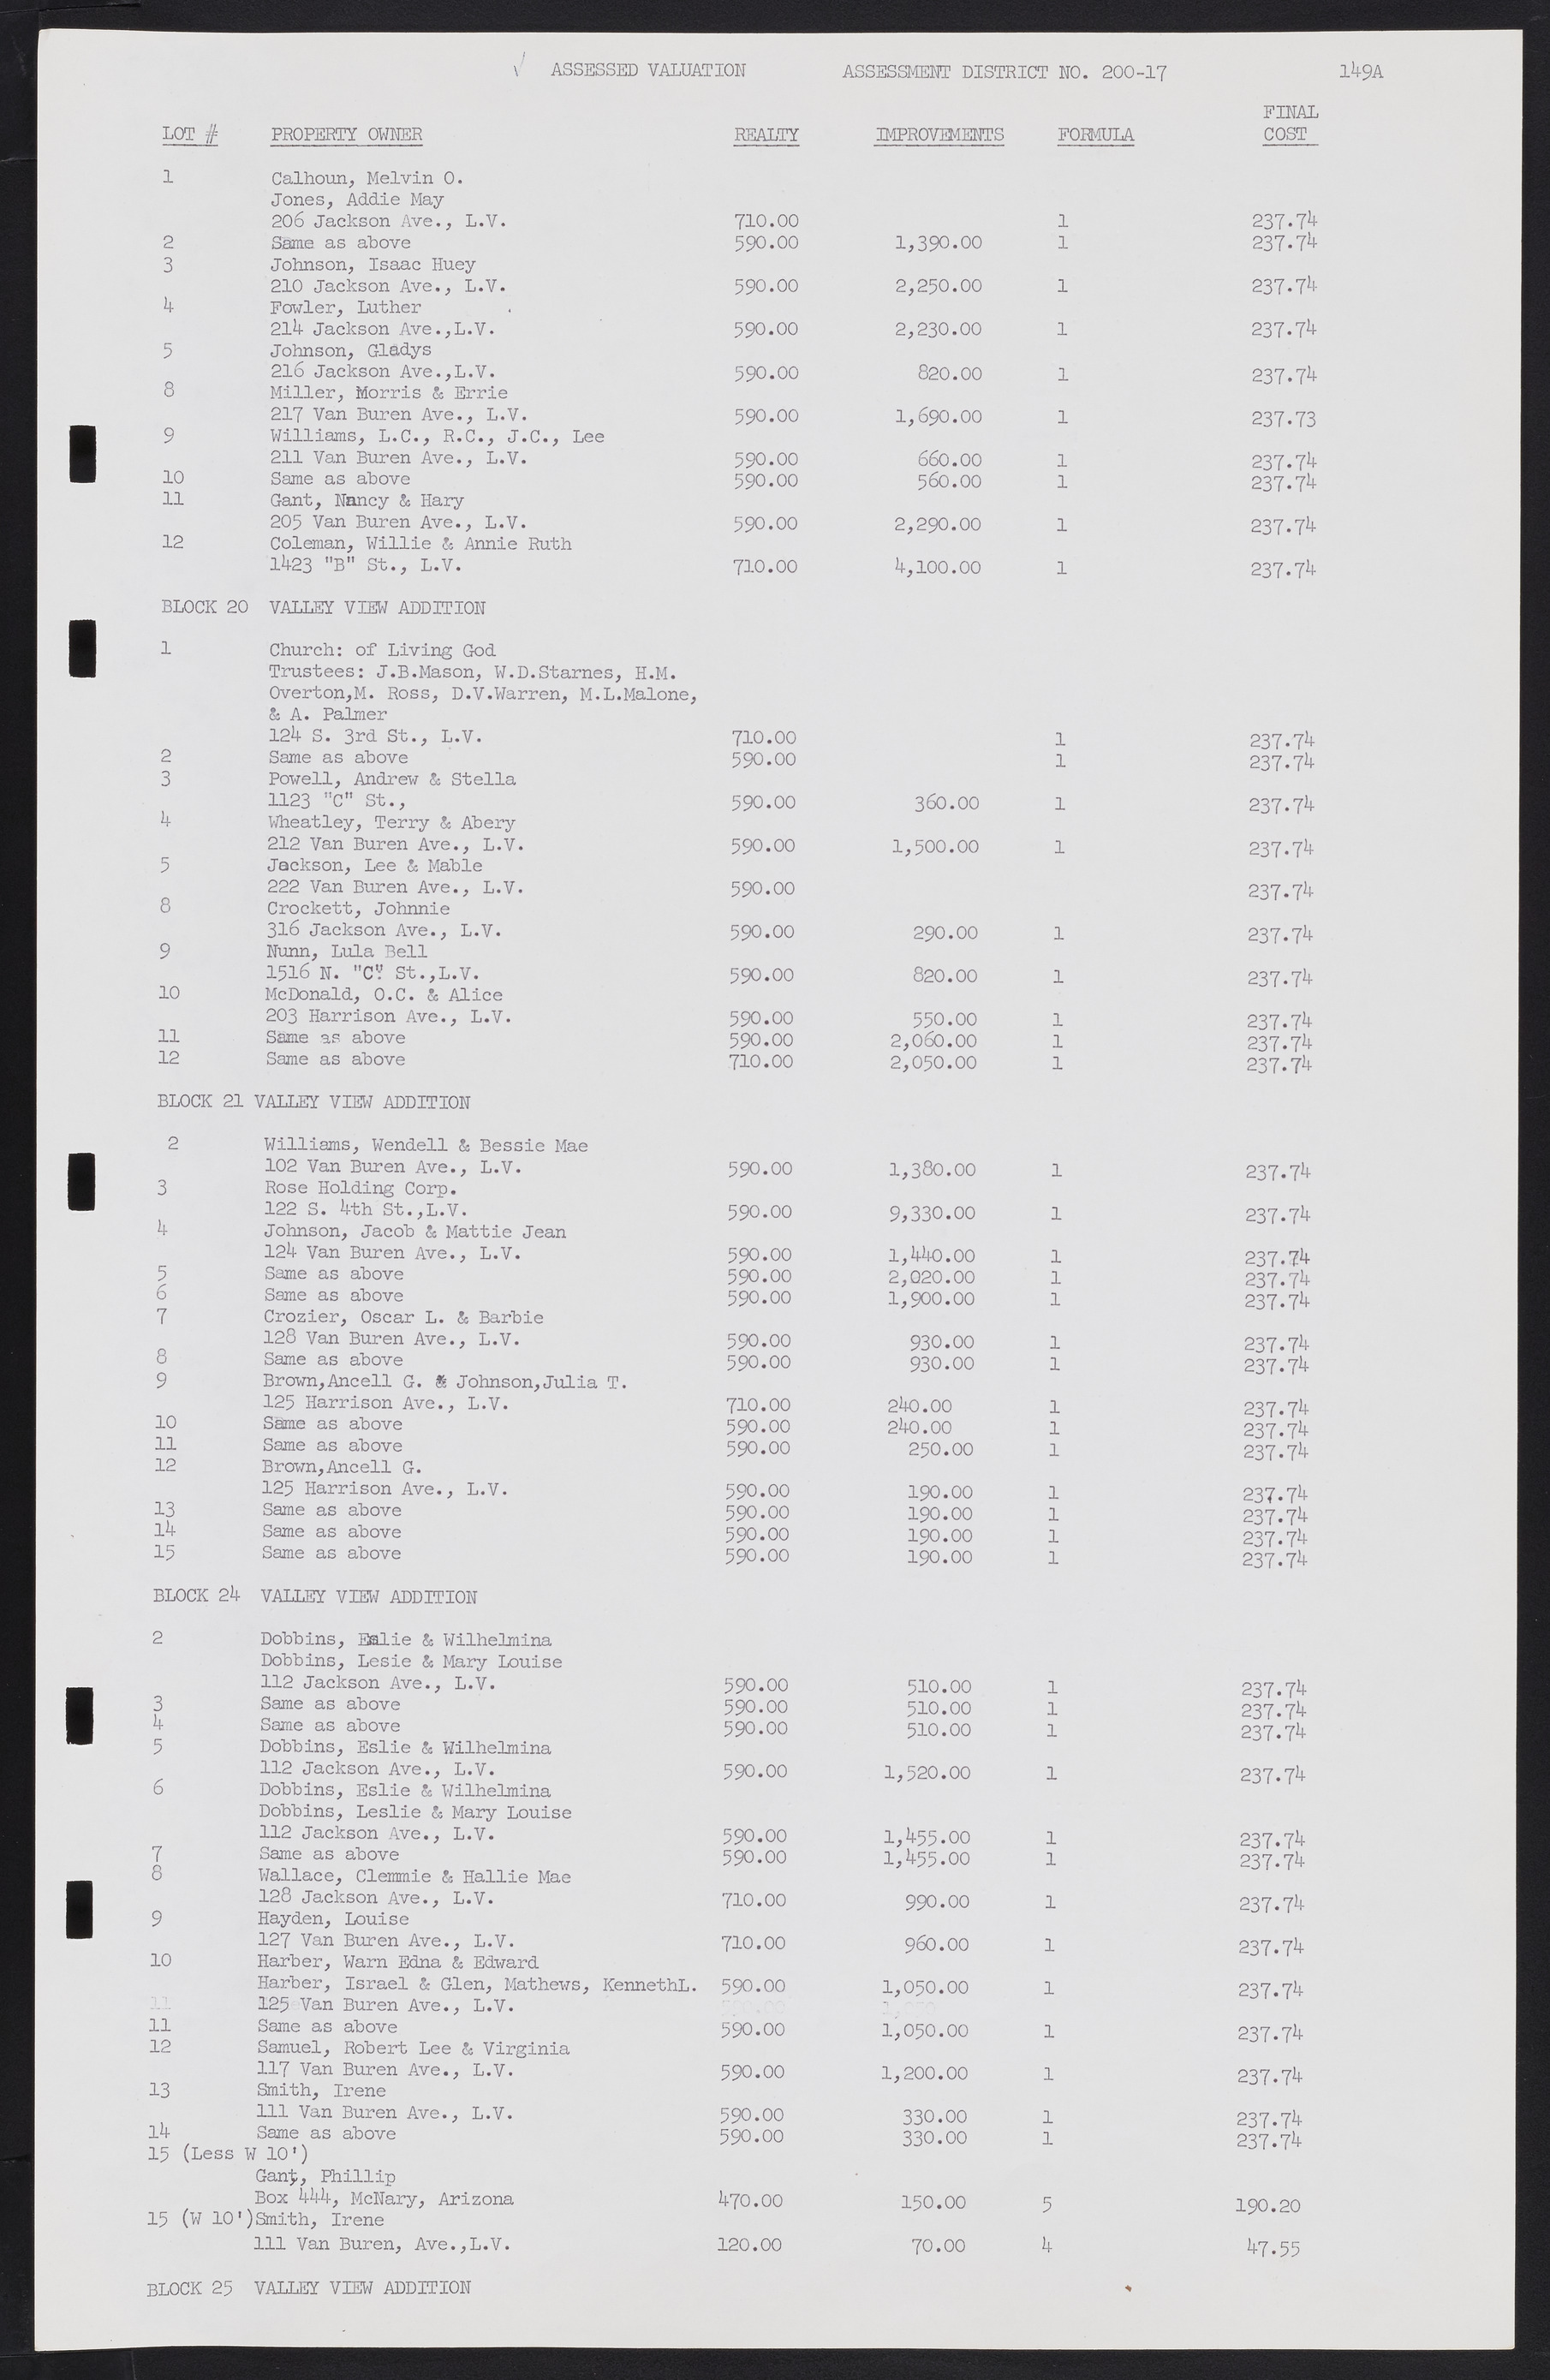 Las Vegas City Commission Minutes, September 21, 1955 to November 20, 1957, lvc000010-159